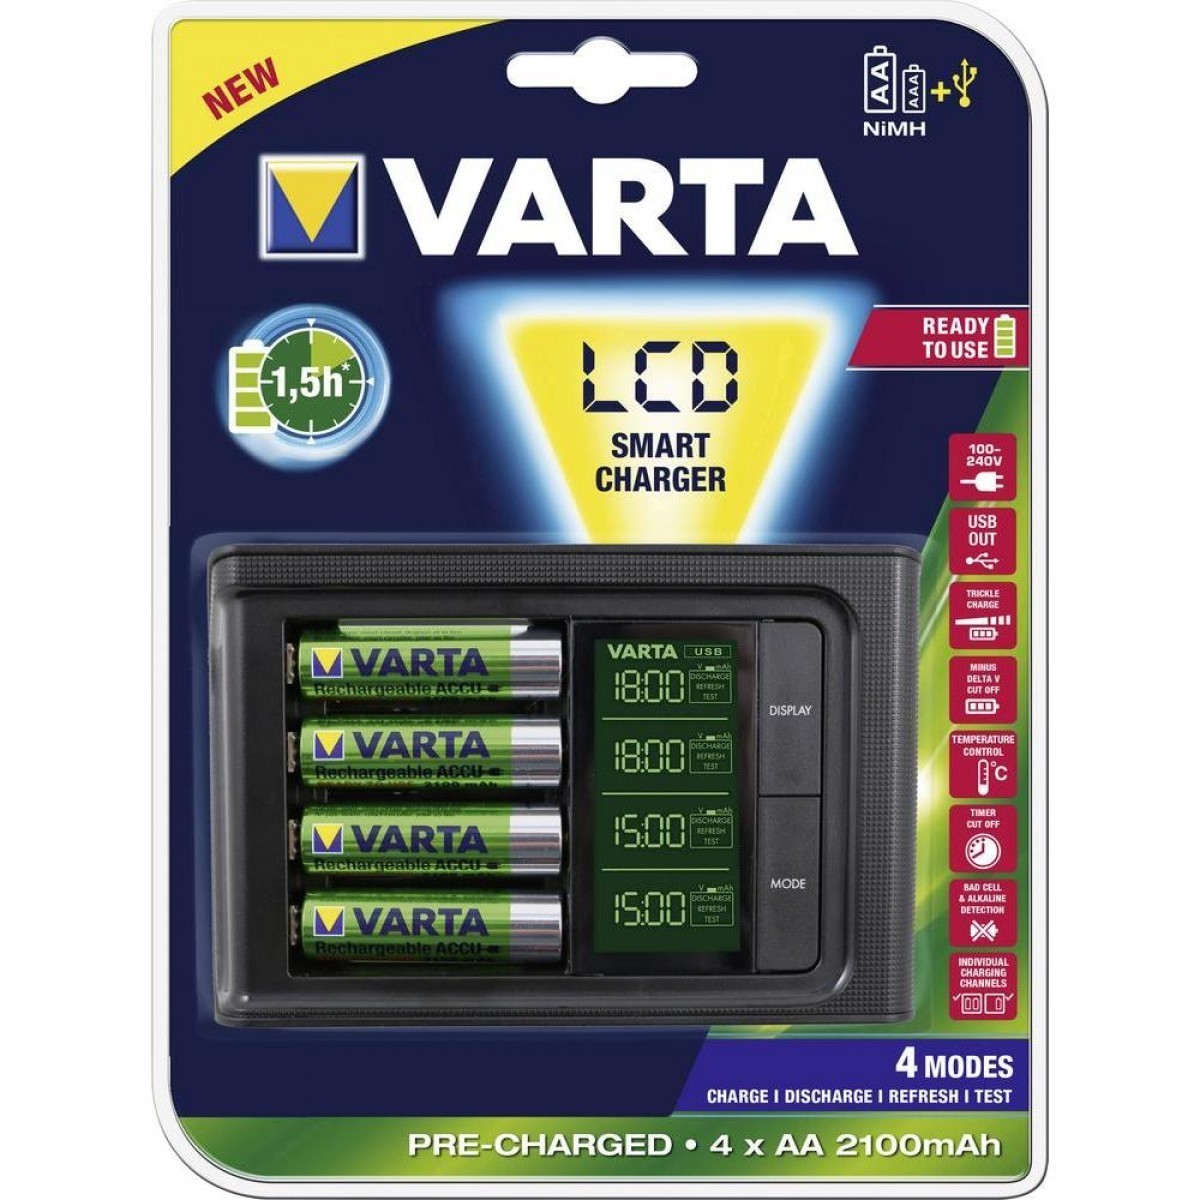 Varta LCD Smart Charger (57674101441)